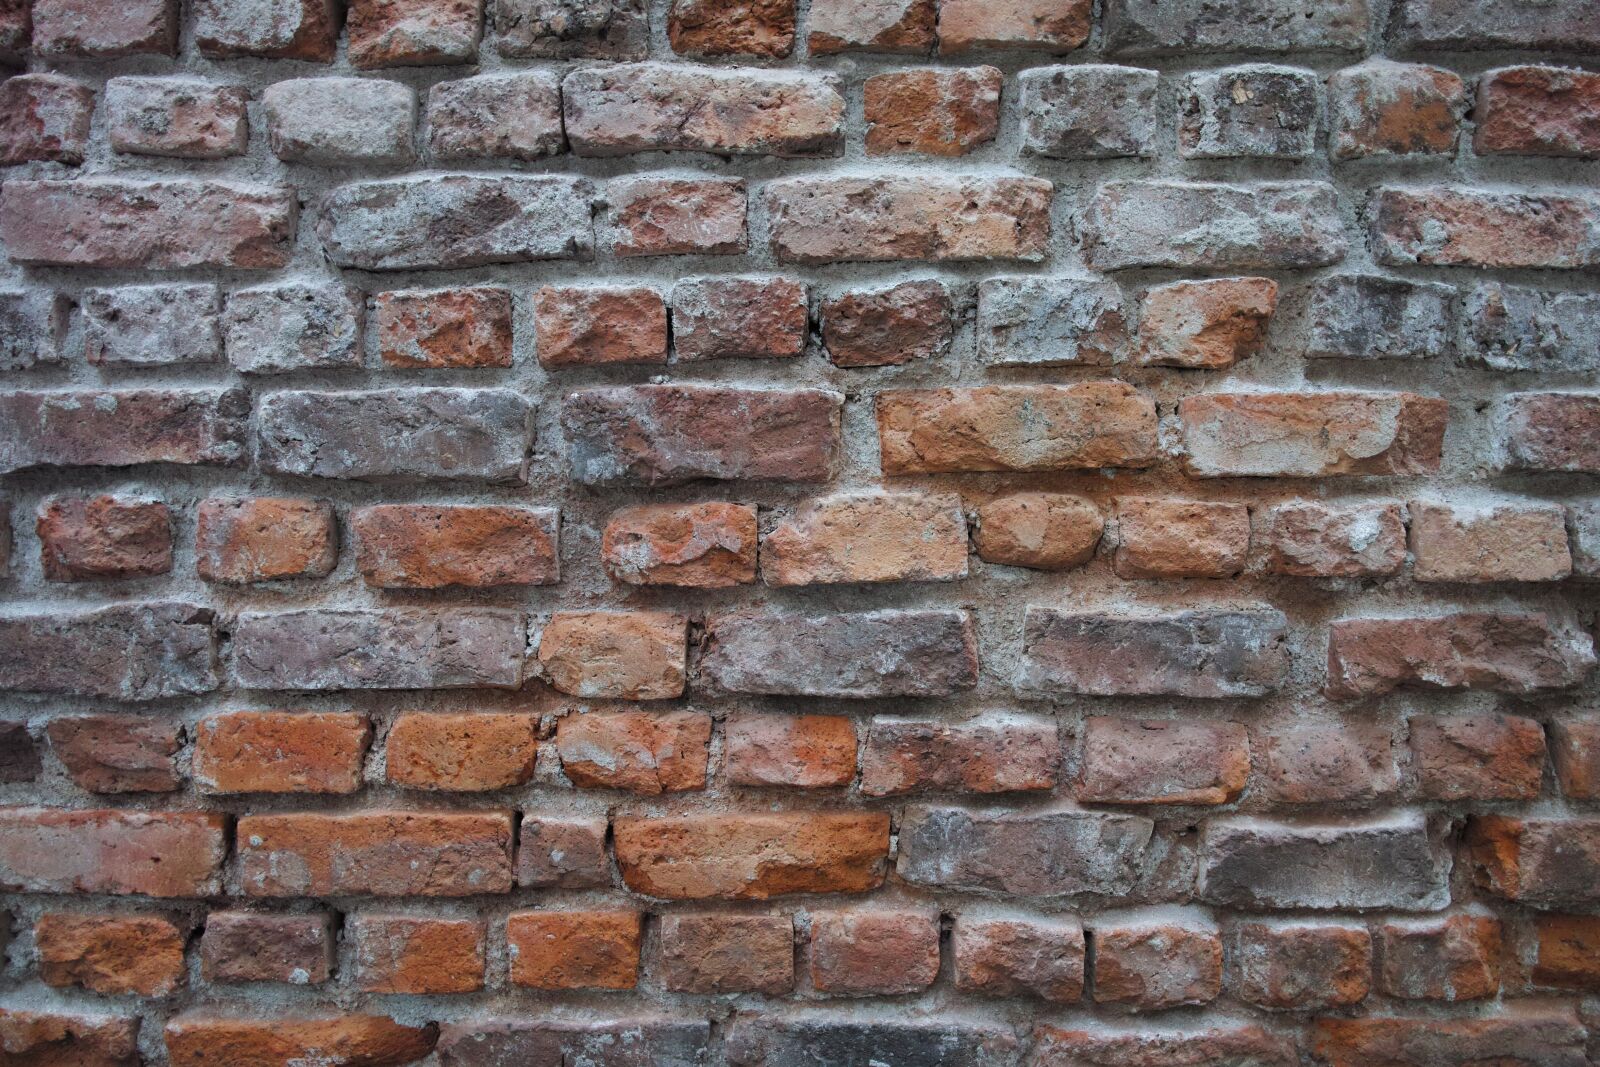 Sigma DP1 Merrill sample photo. Brick, pattern, texture photography